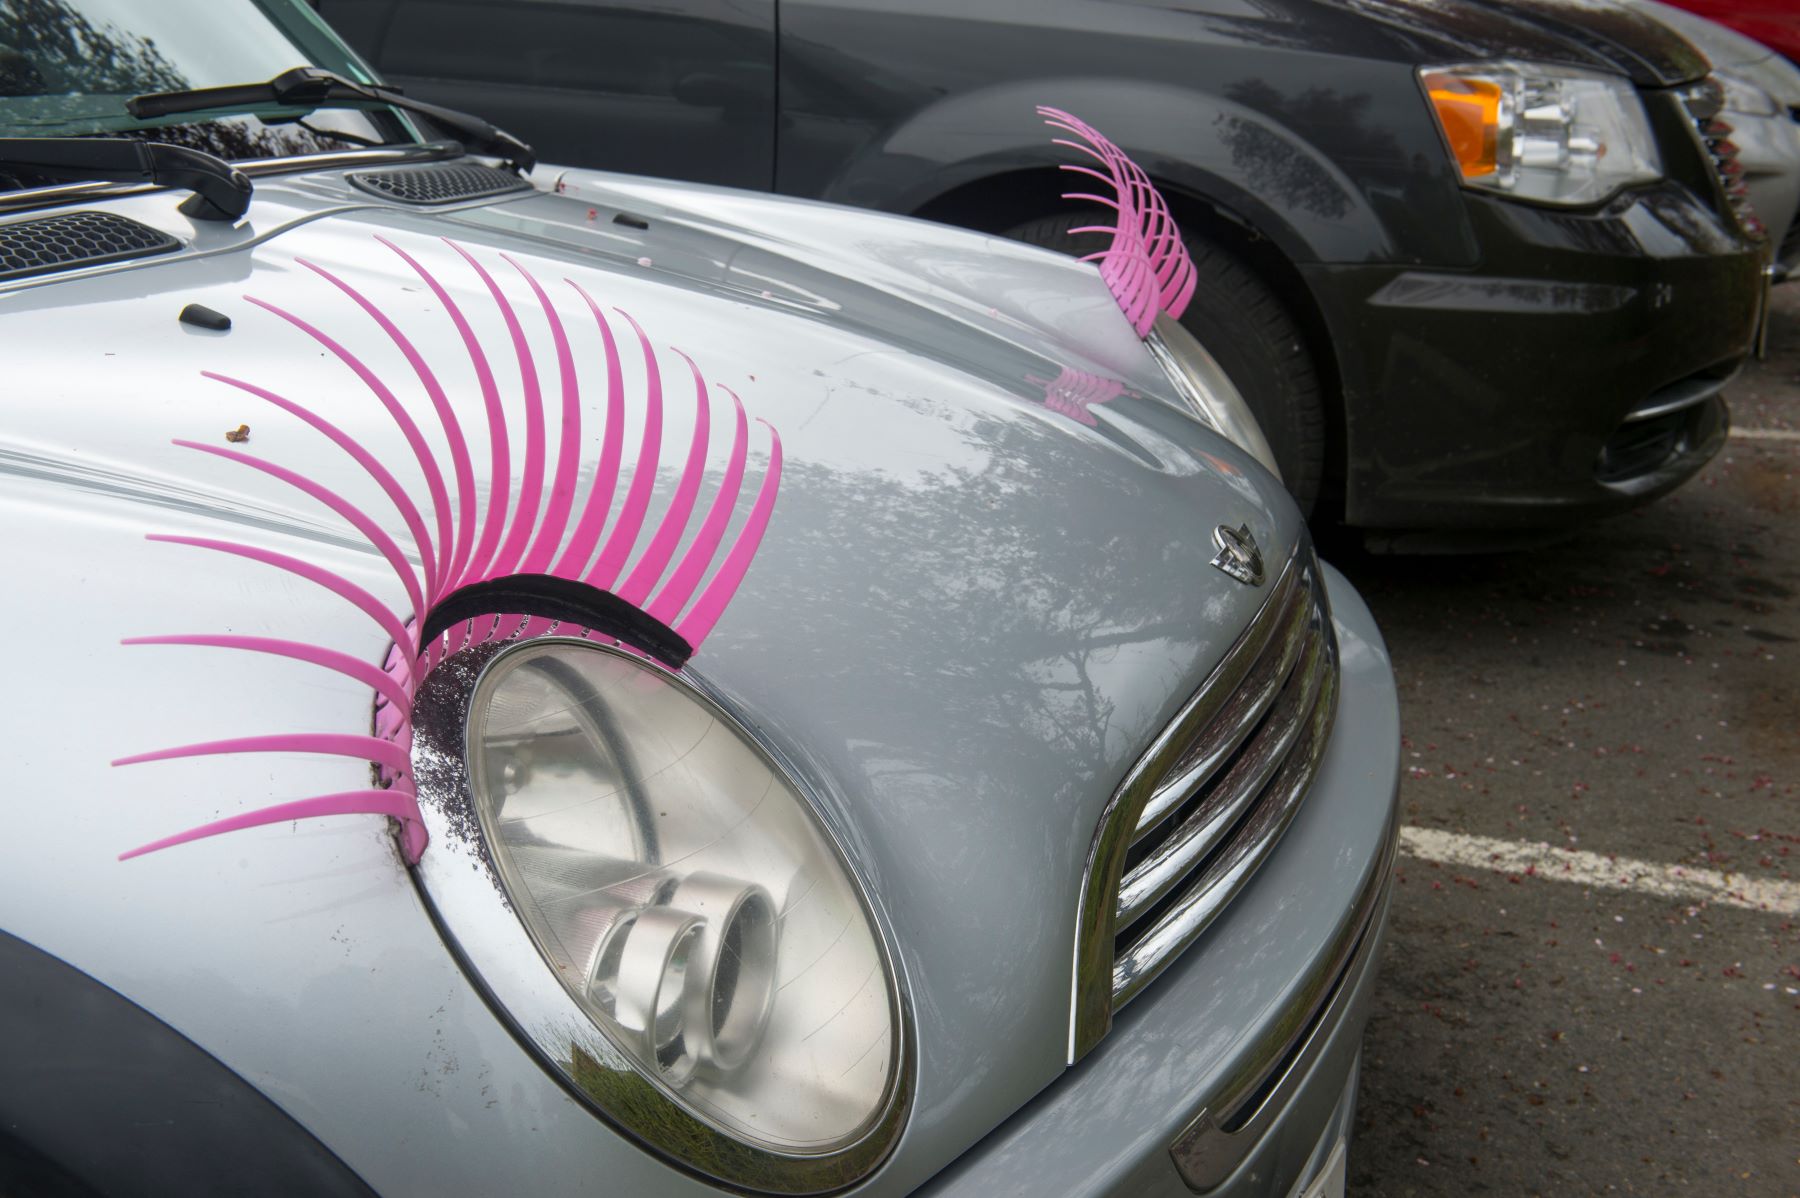 CarLashes, AKA car eye lashses. An exterior feminine car accessory on a Mini Cooper in Kitsap County, Washington.